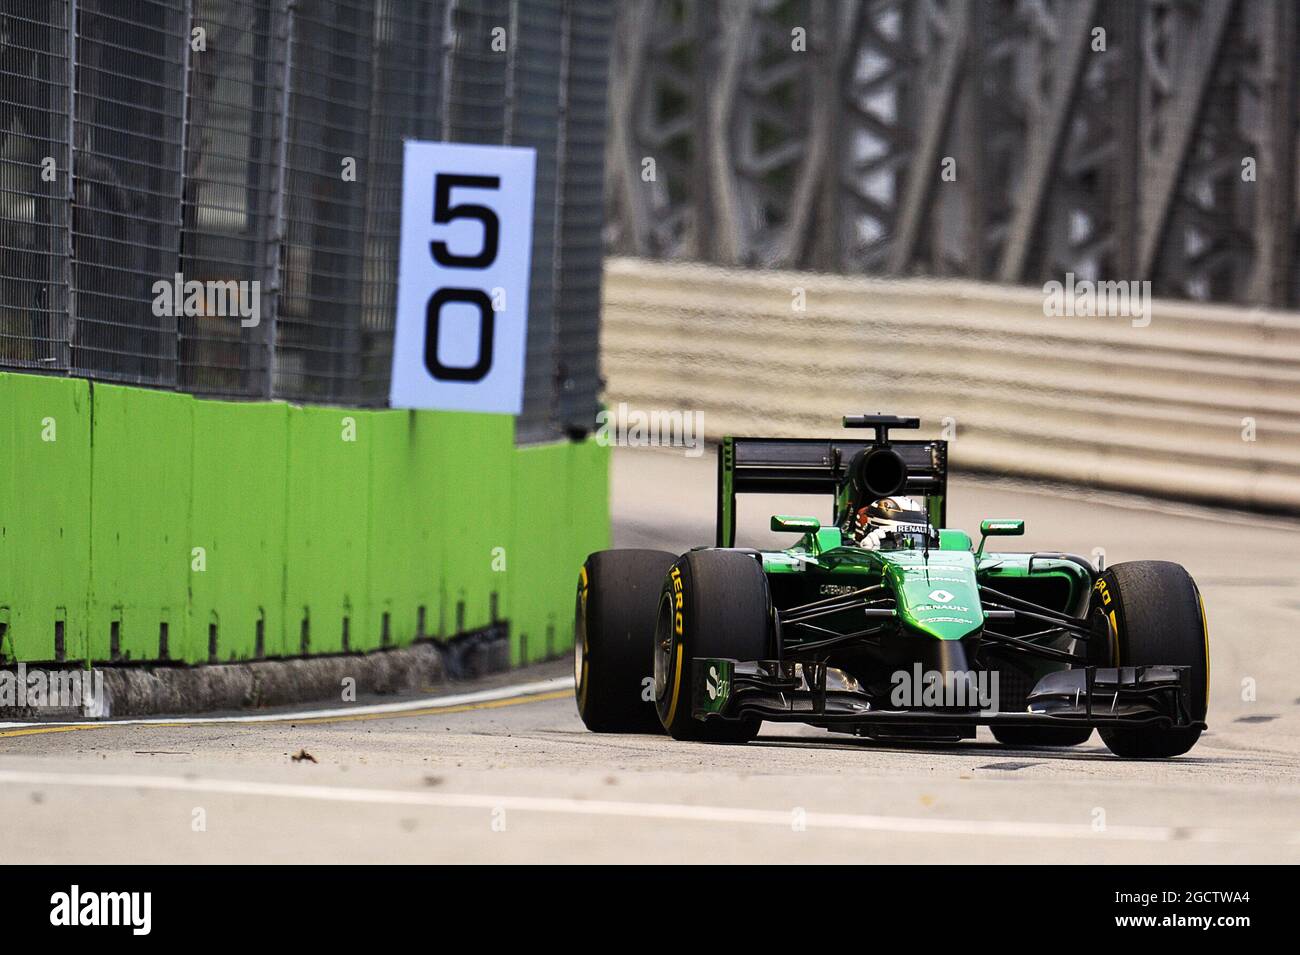 Kamui Kobayashi (JPN) Caterham CT05. Gran Premio di Singapore, sabato 20 settembre 2014. Circuito Marina Bay Street, Singapore. Foto Stock